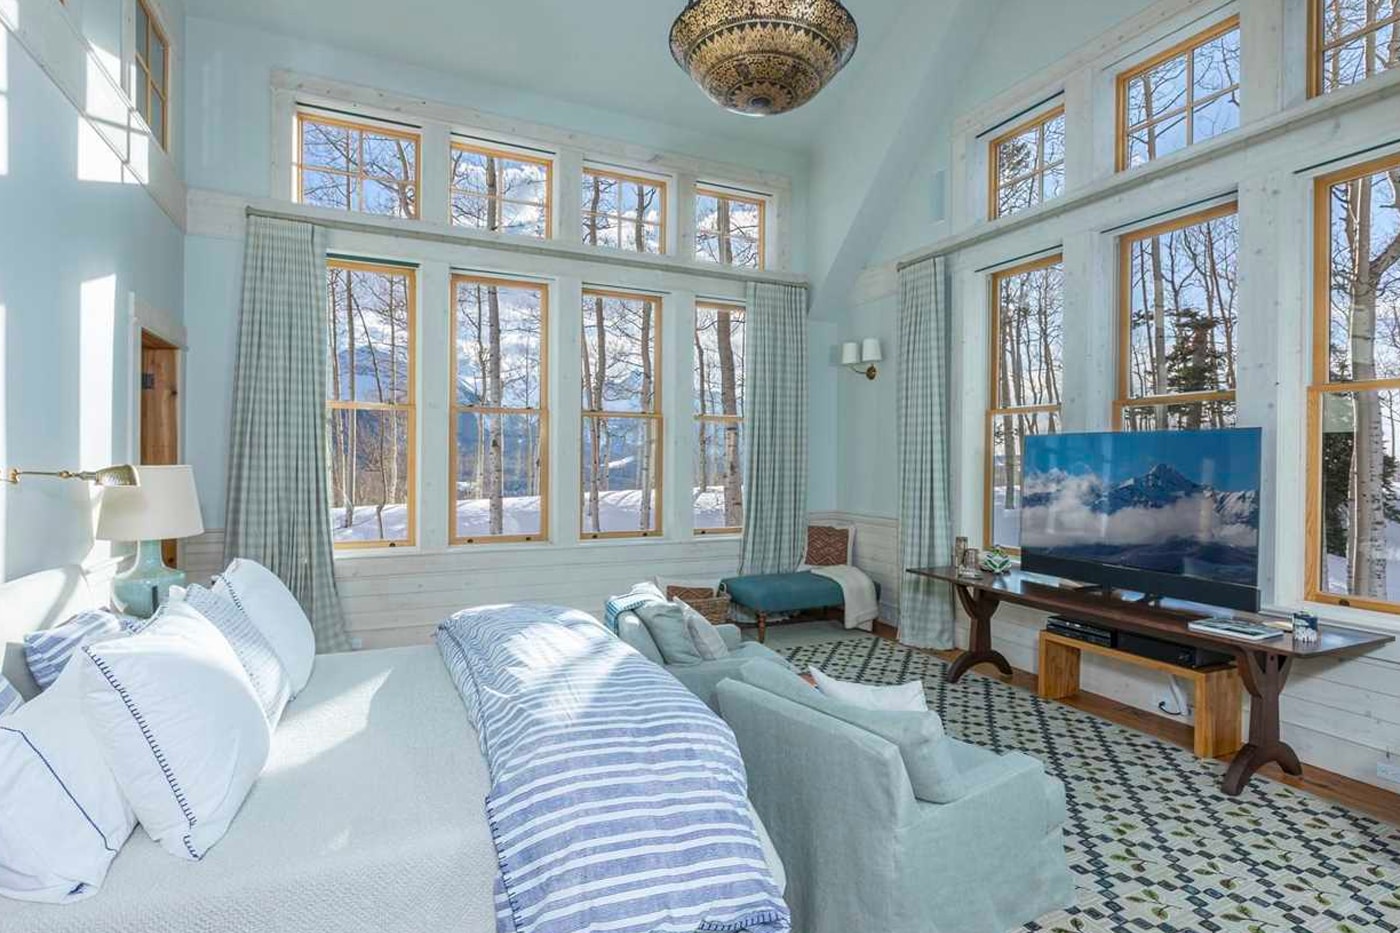 Jerry Seinfeld Colorado Telluride ski house listing comedian celebrity homes ski resort winter housing home Lipkin-Warner architecture 